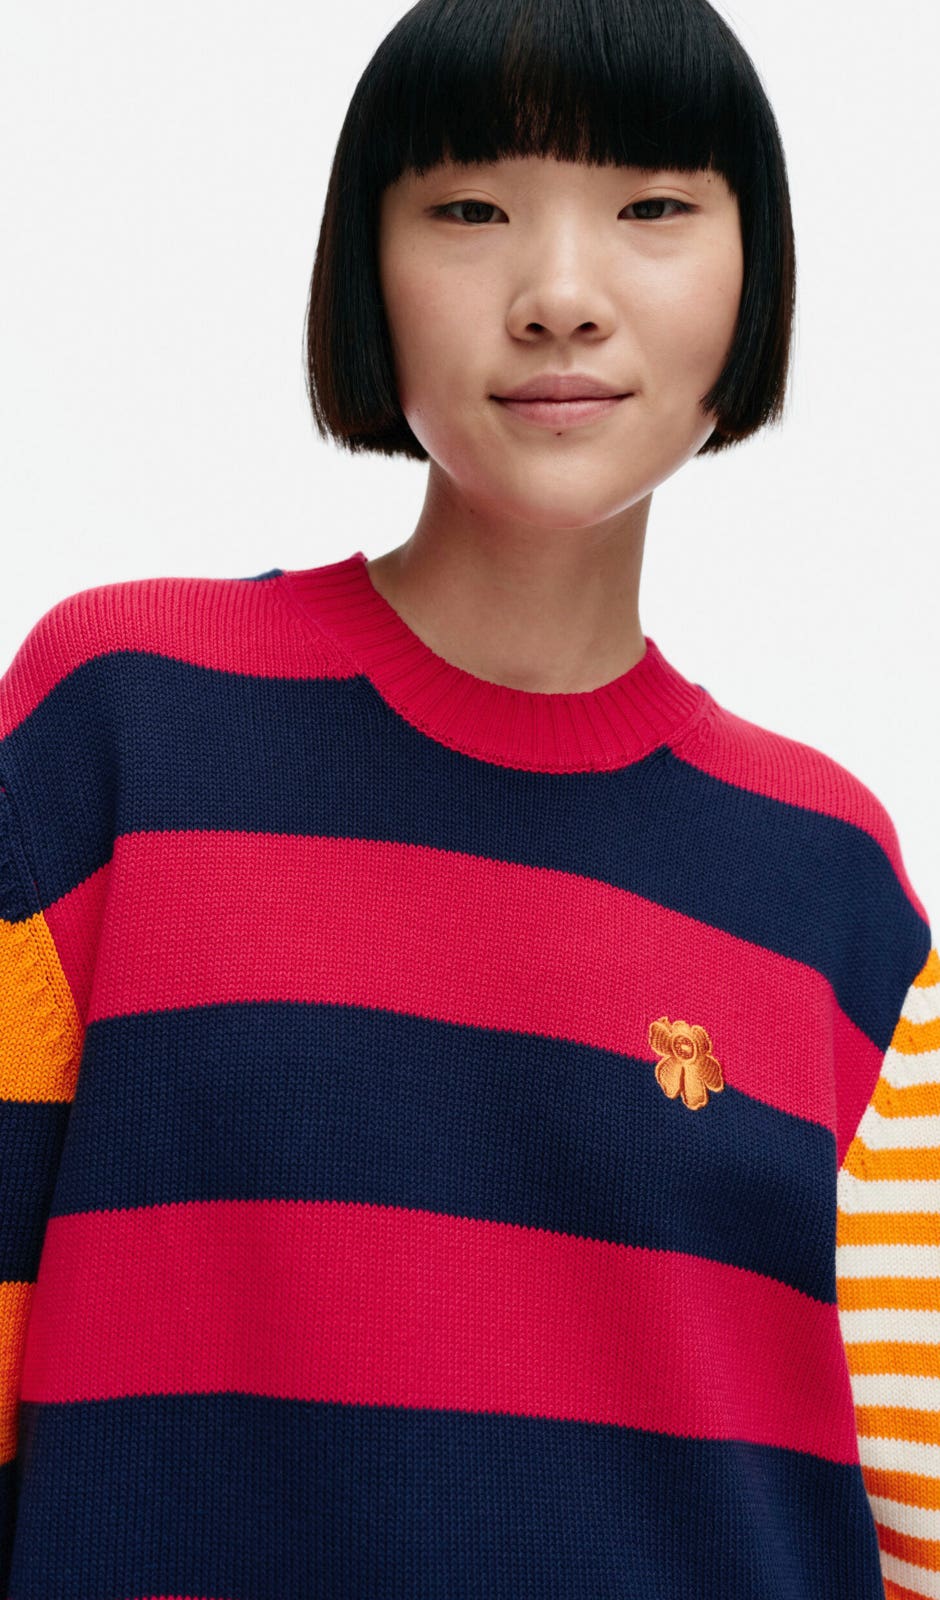 Kesäkoju Maalis Patja knitted jumper – organic cotton